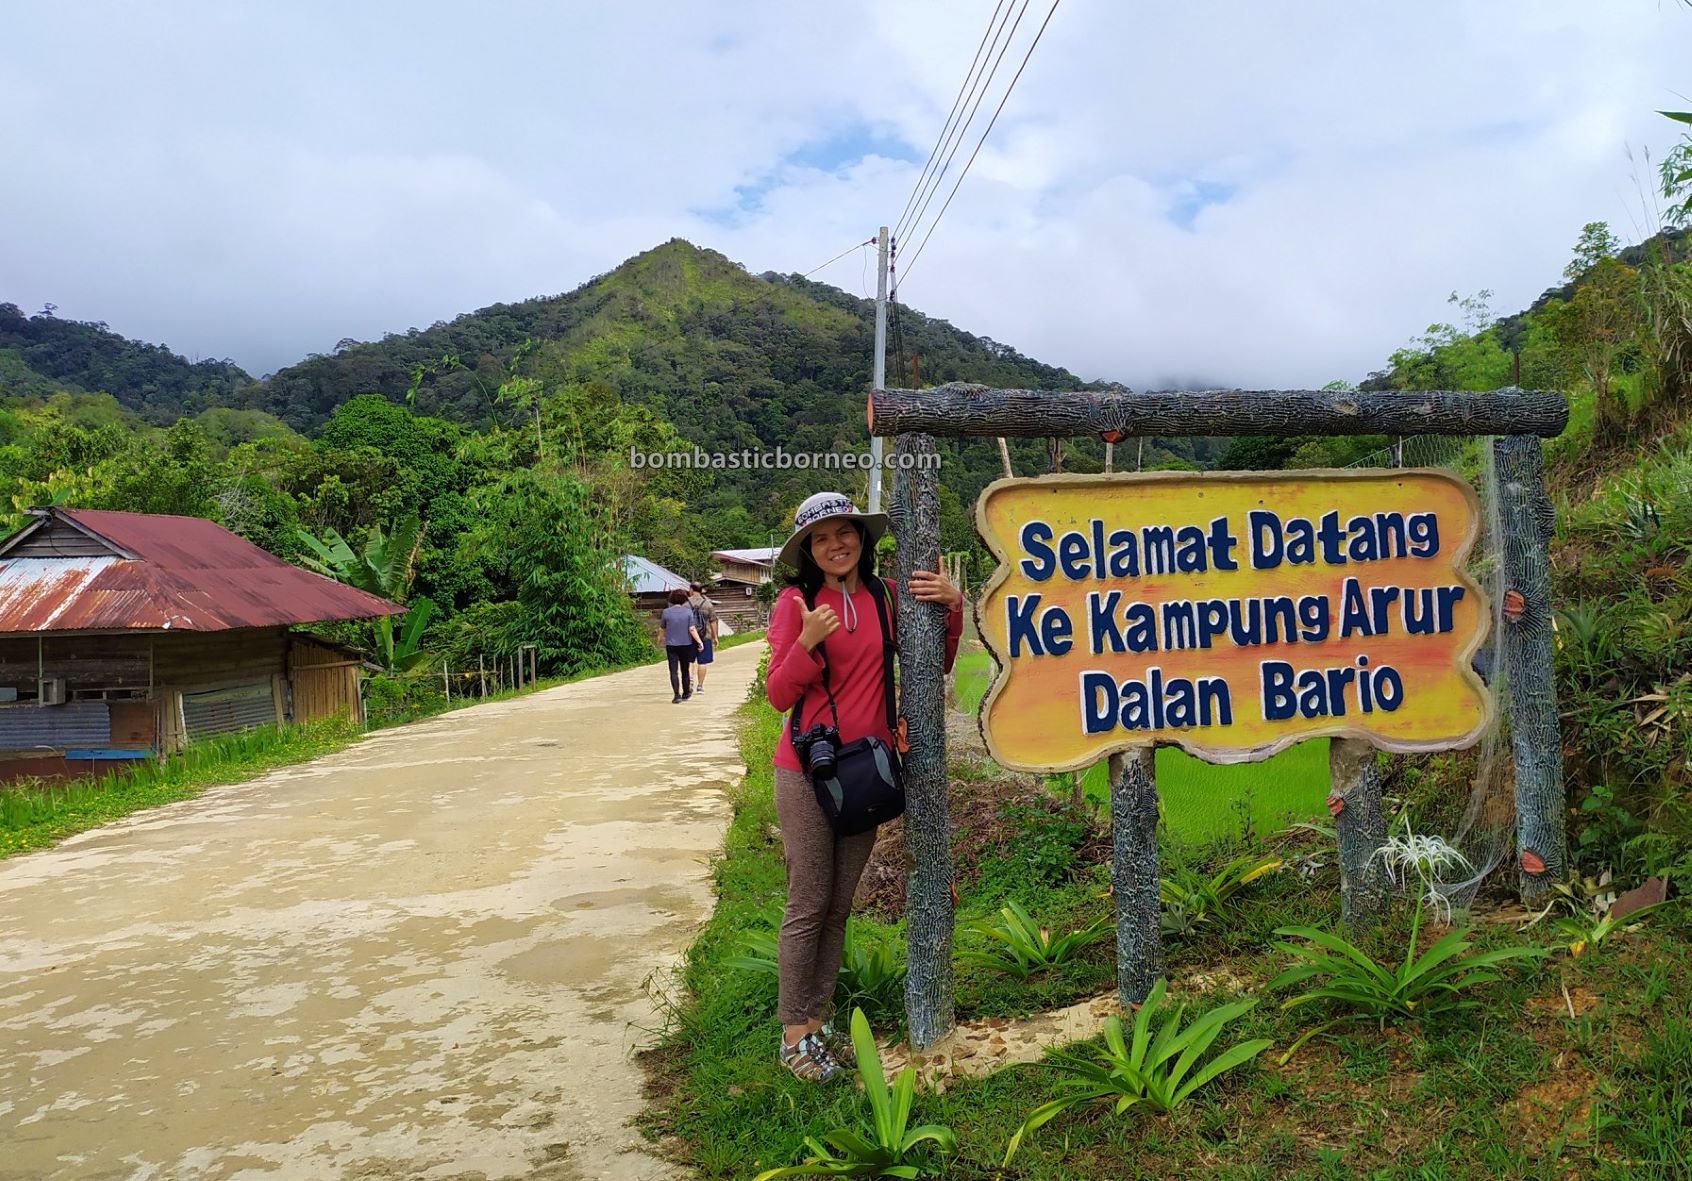 Kelabit Highlands, adventure, nature, destination, exploration, hiking, Prayer mountain, homestay, Malaysia, Tourism, travel guide, Borneo, 马来西亚砂拉越高原, 巴里奥达雅加拉毕族, 乌鲁人土著部落,